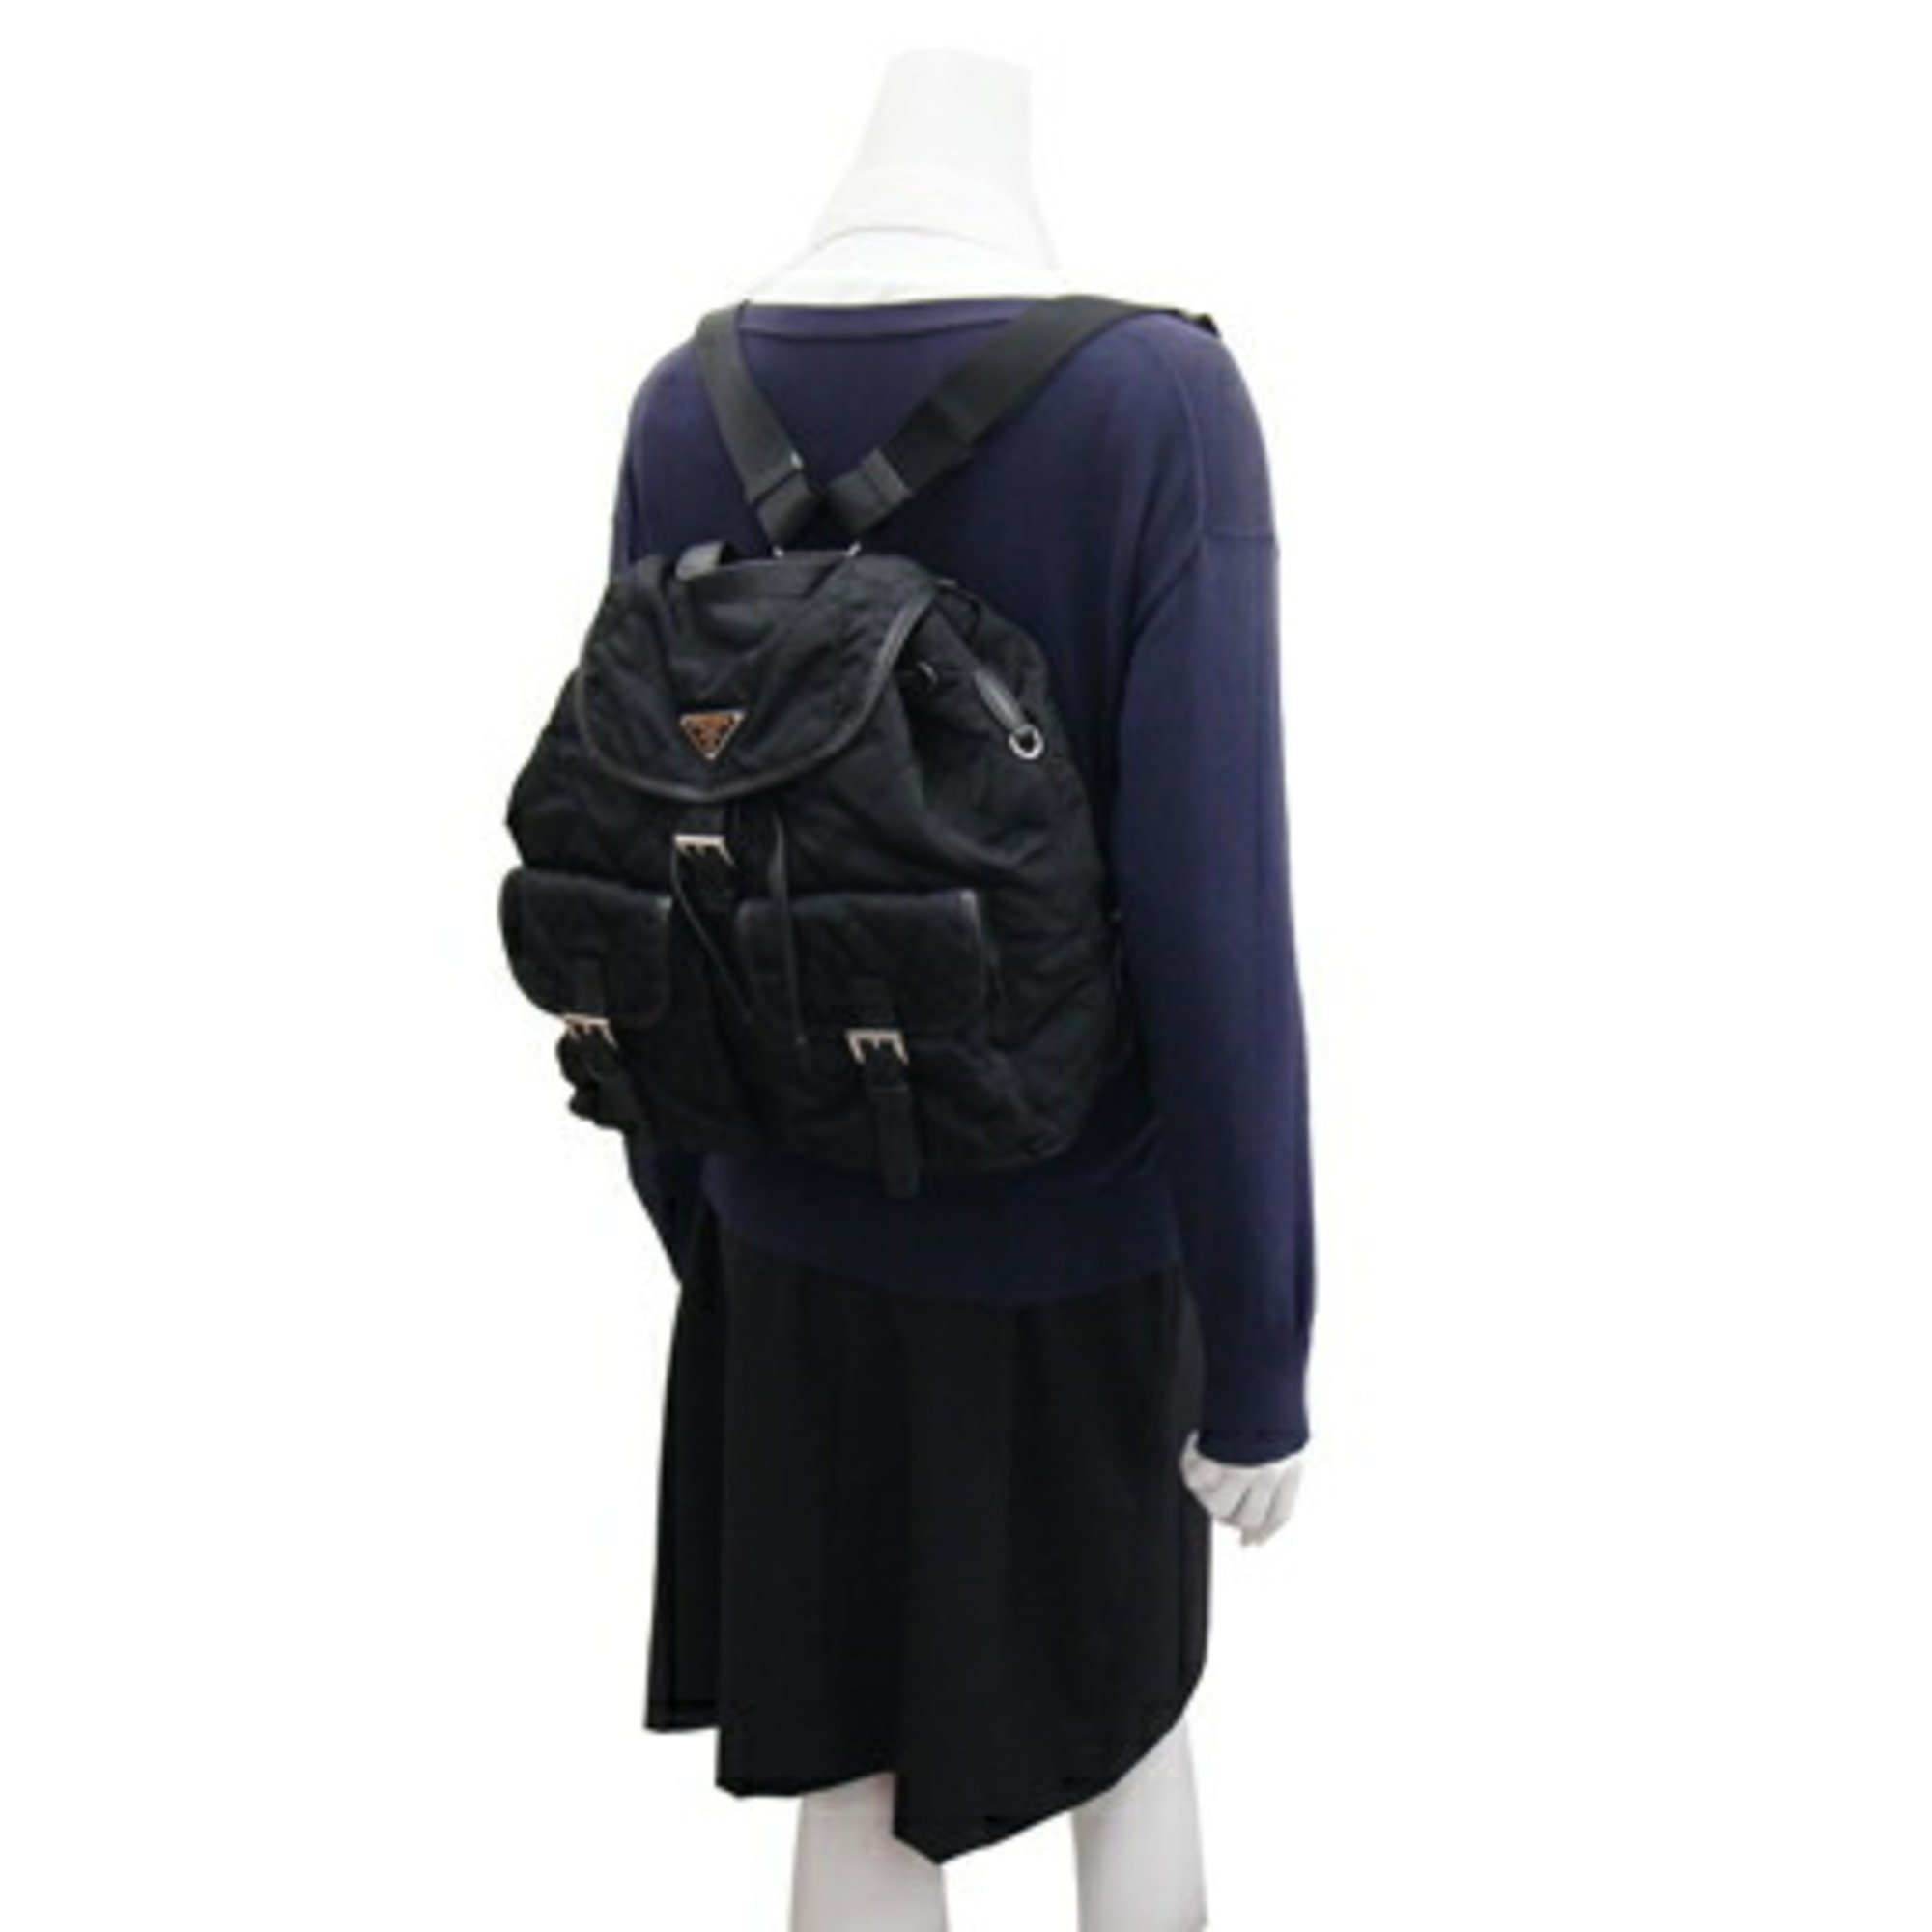 Prada Backpack 1BZ811 Black Nylon Leather Rucksack Quilted Ladies PRADA